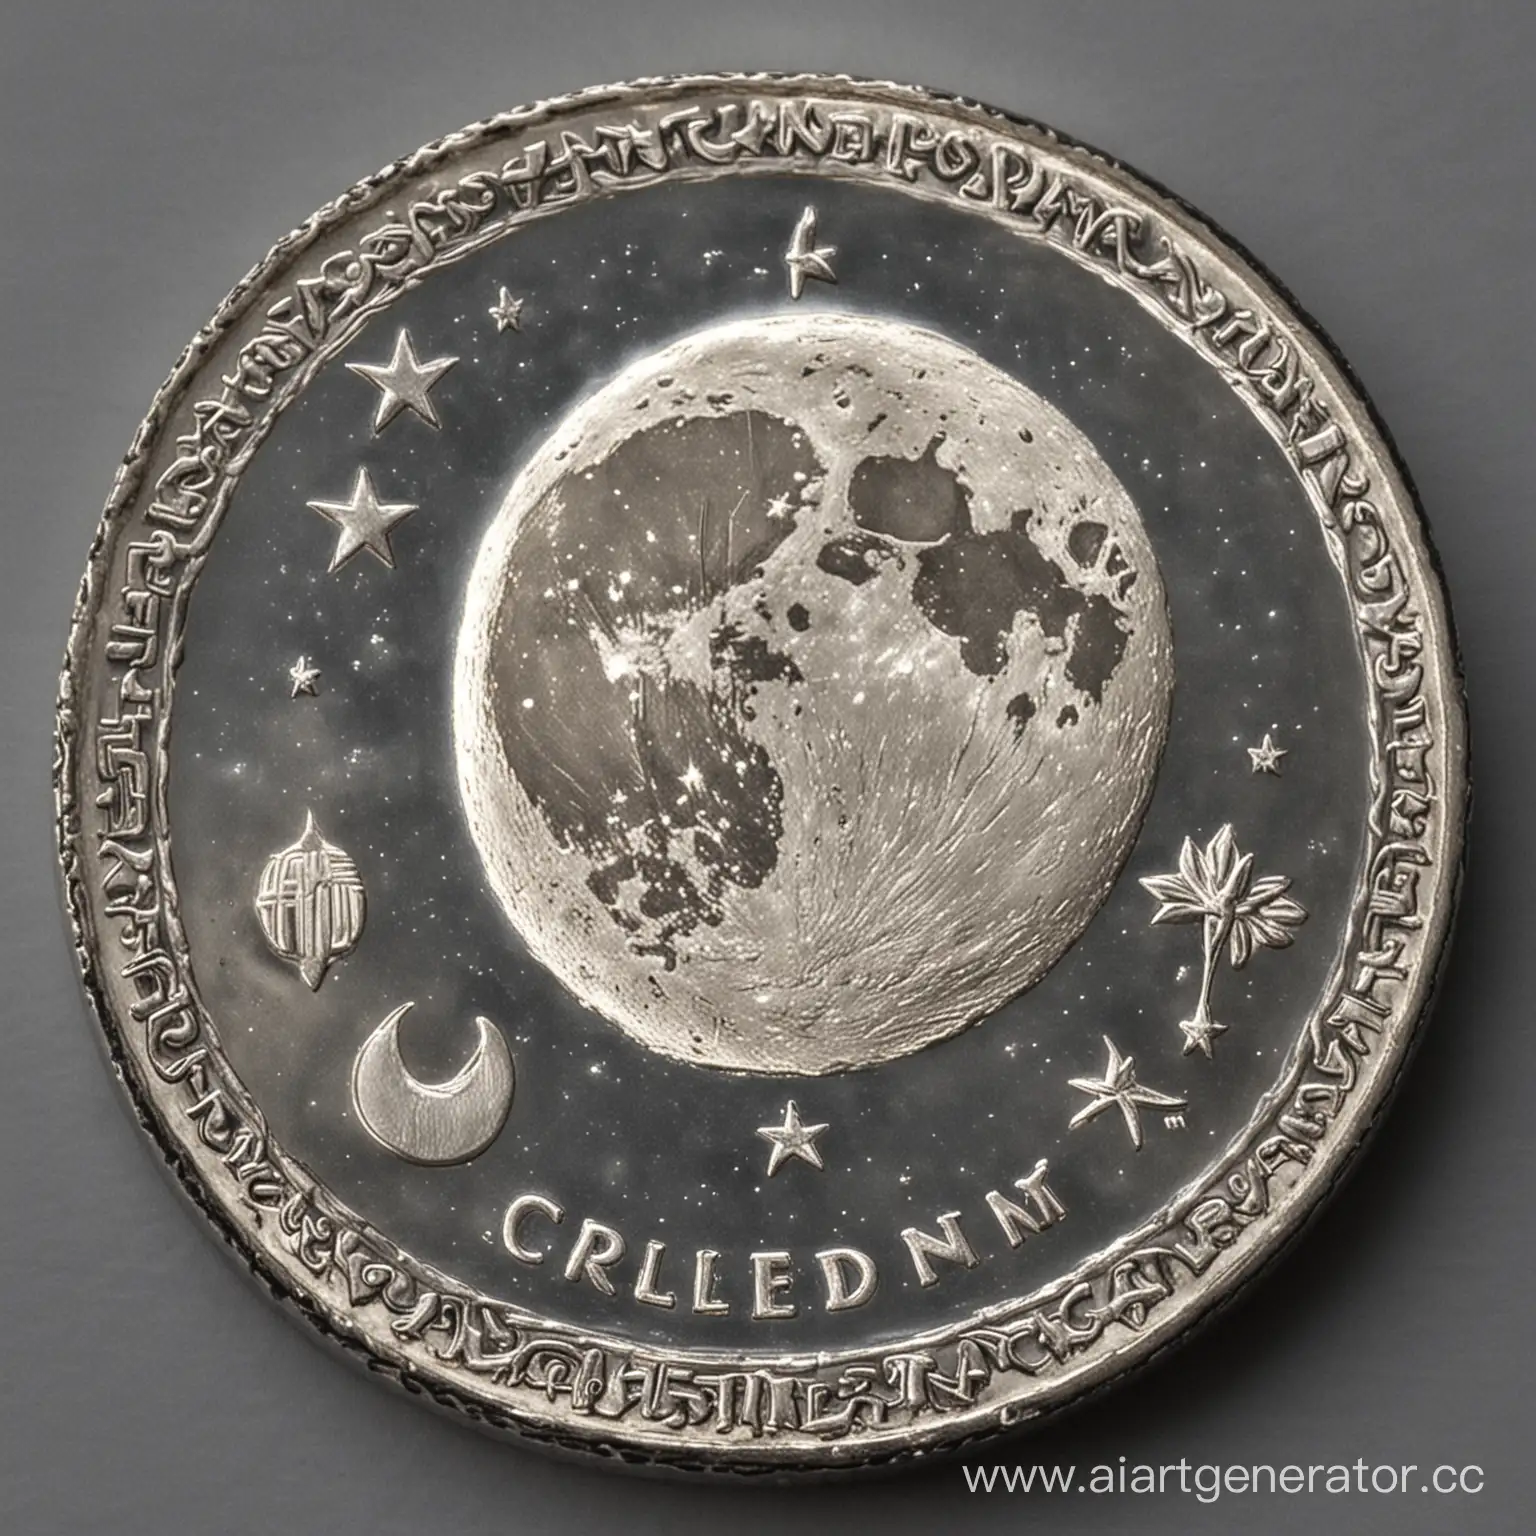 Enchanted-Silver-Coin-with-Moon-Design